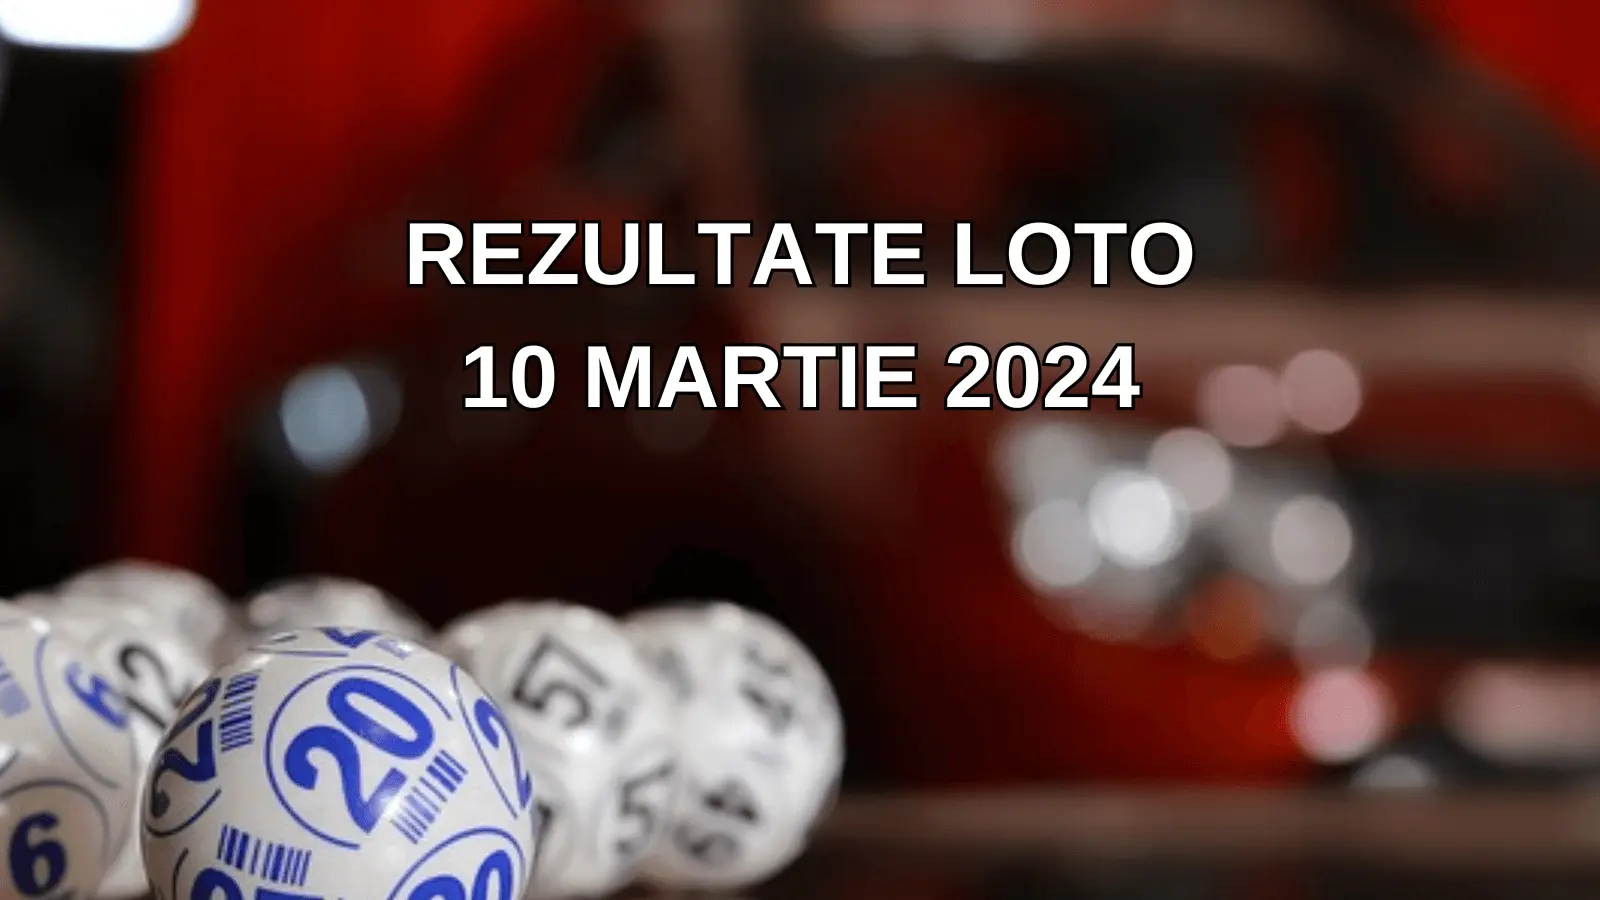 Rezultate Loto 10 martie 2024 – Loto 6/49, Loto 5/40, Joker și Noroc